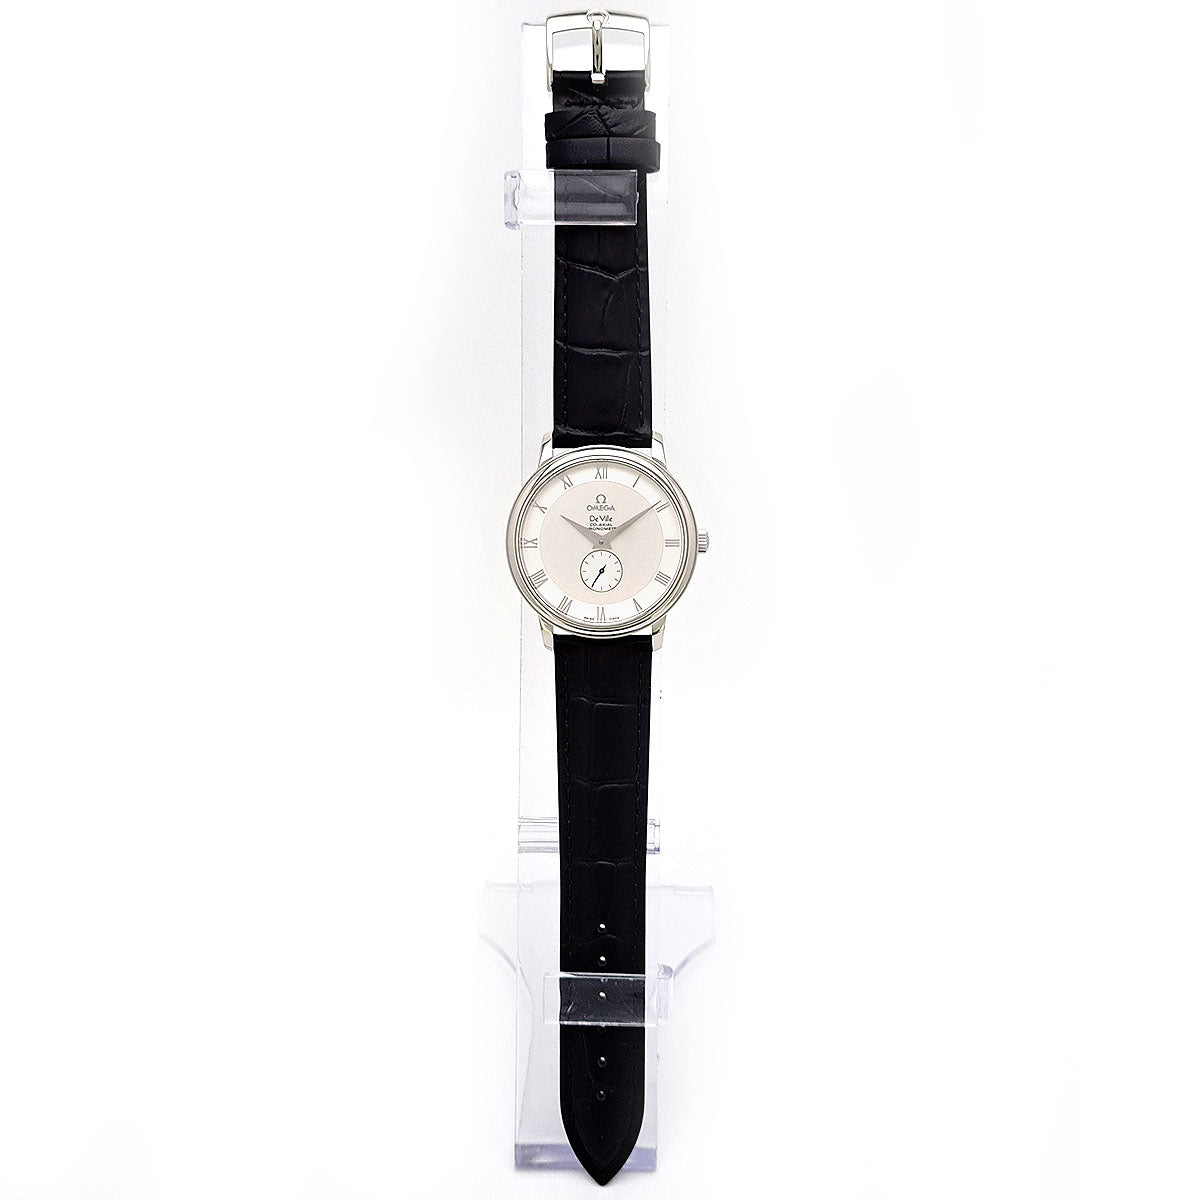 OMEGA De Ville Prestige Co-Axial Small Seconds Men's Stainless Steel Watch, Model 4813.30.01 4813.30.01